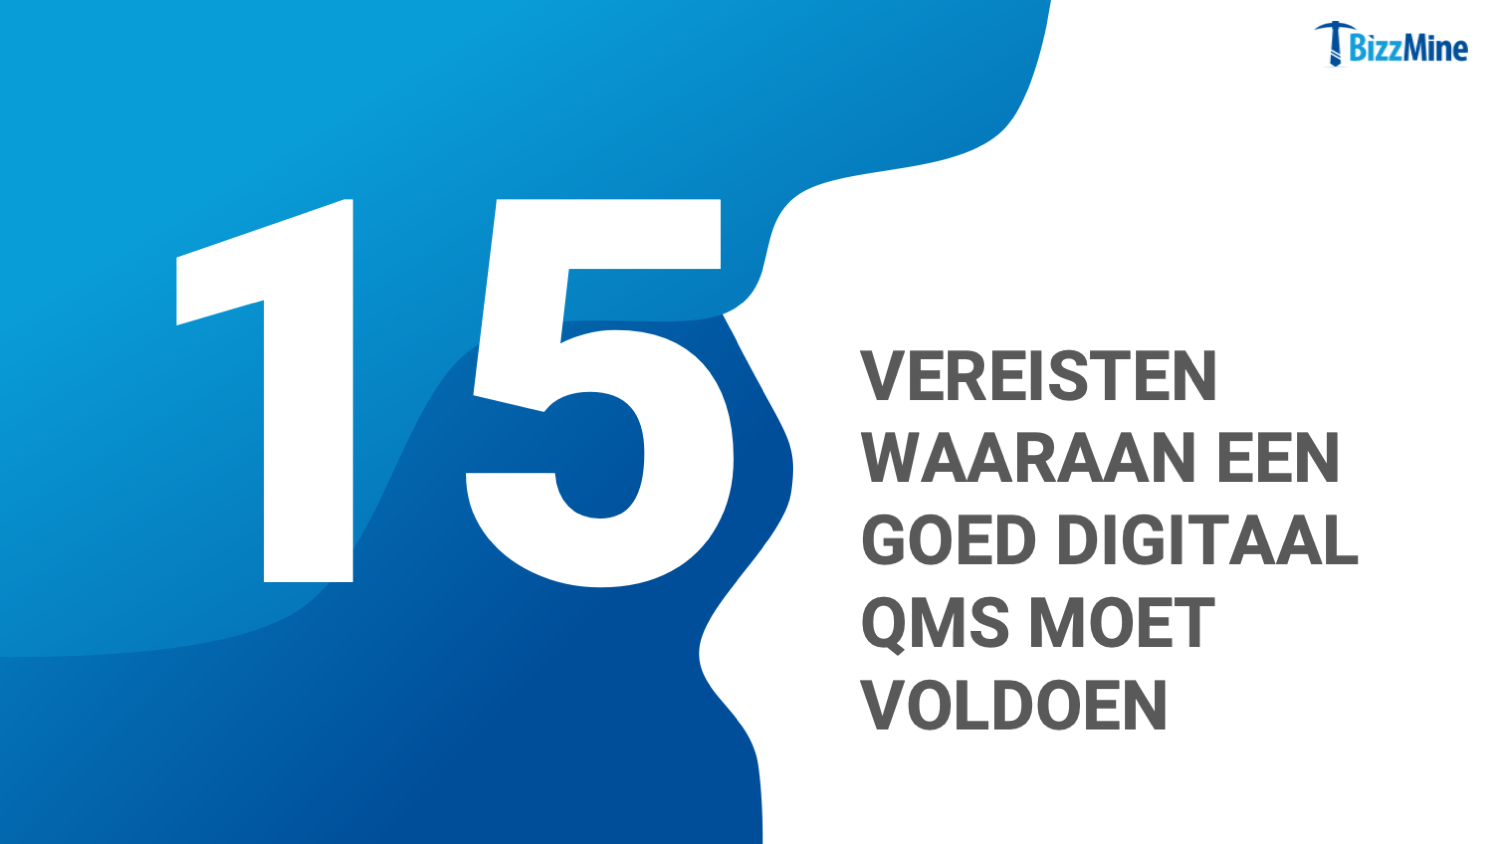 White Paper Digital QMS NL